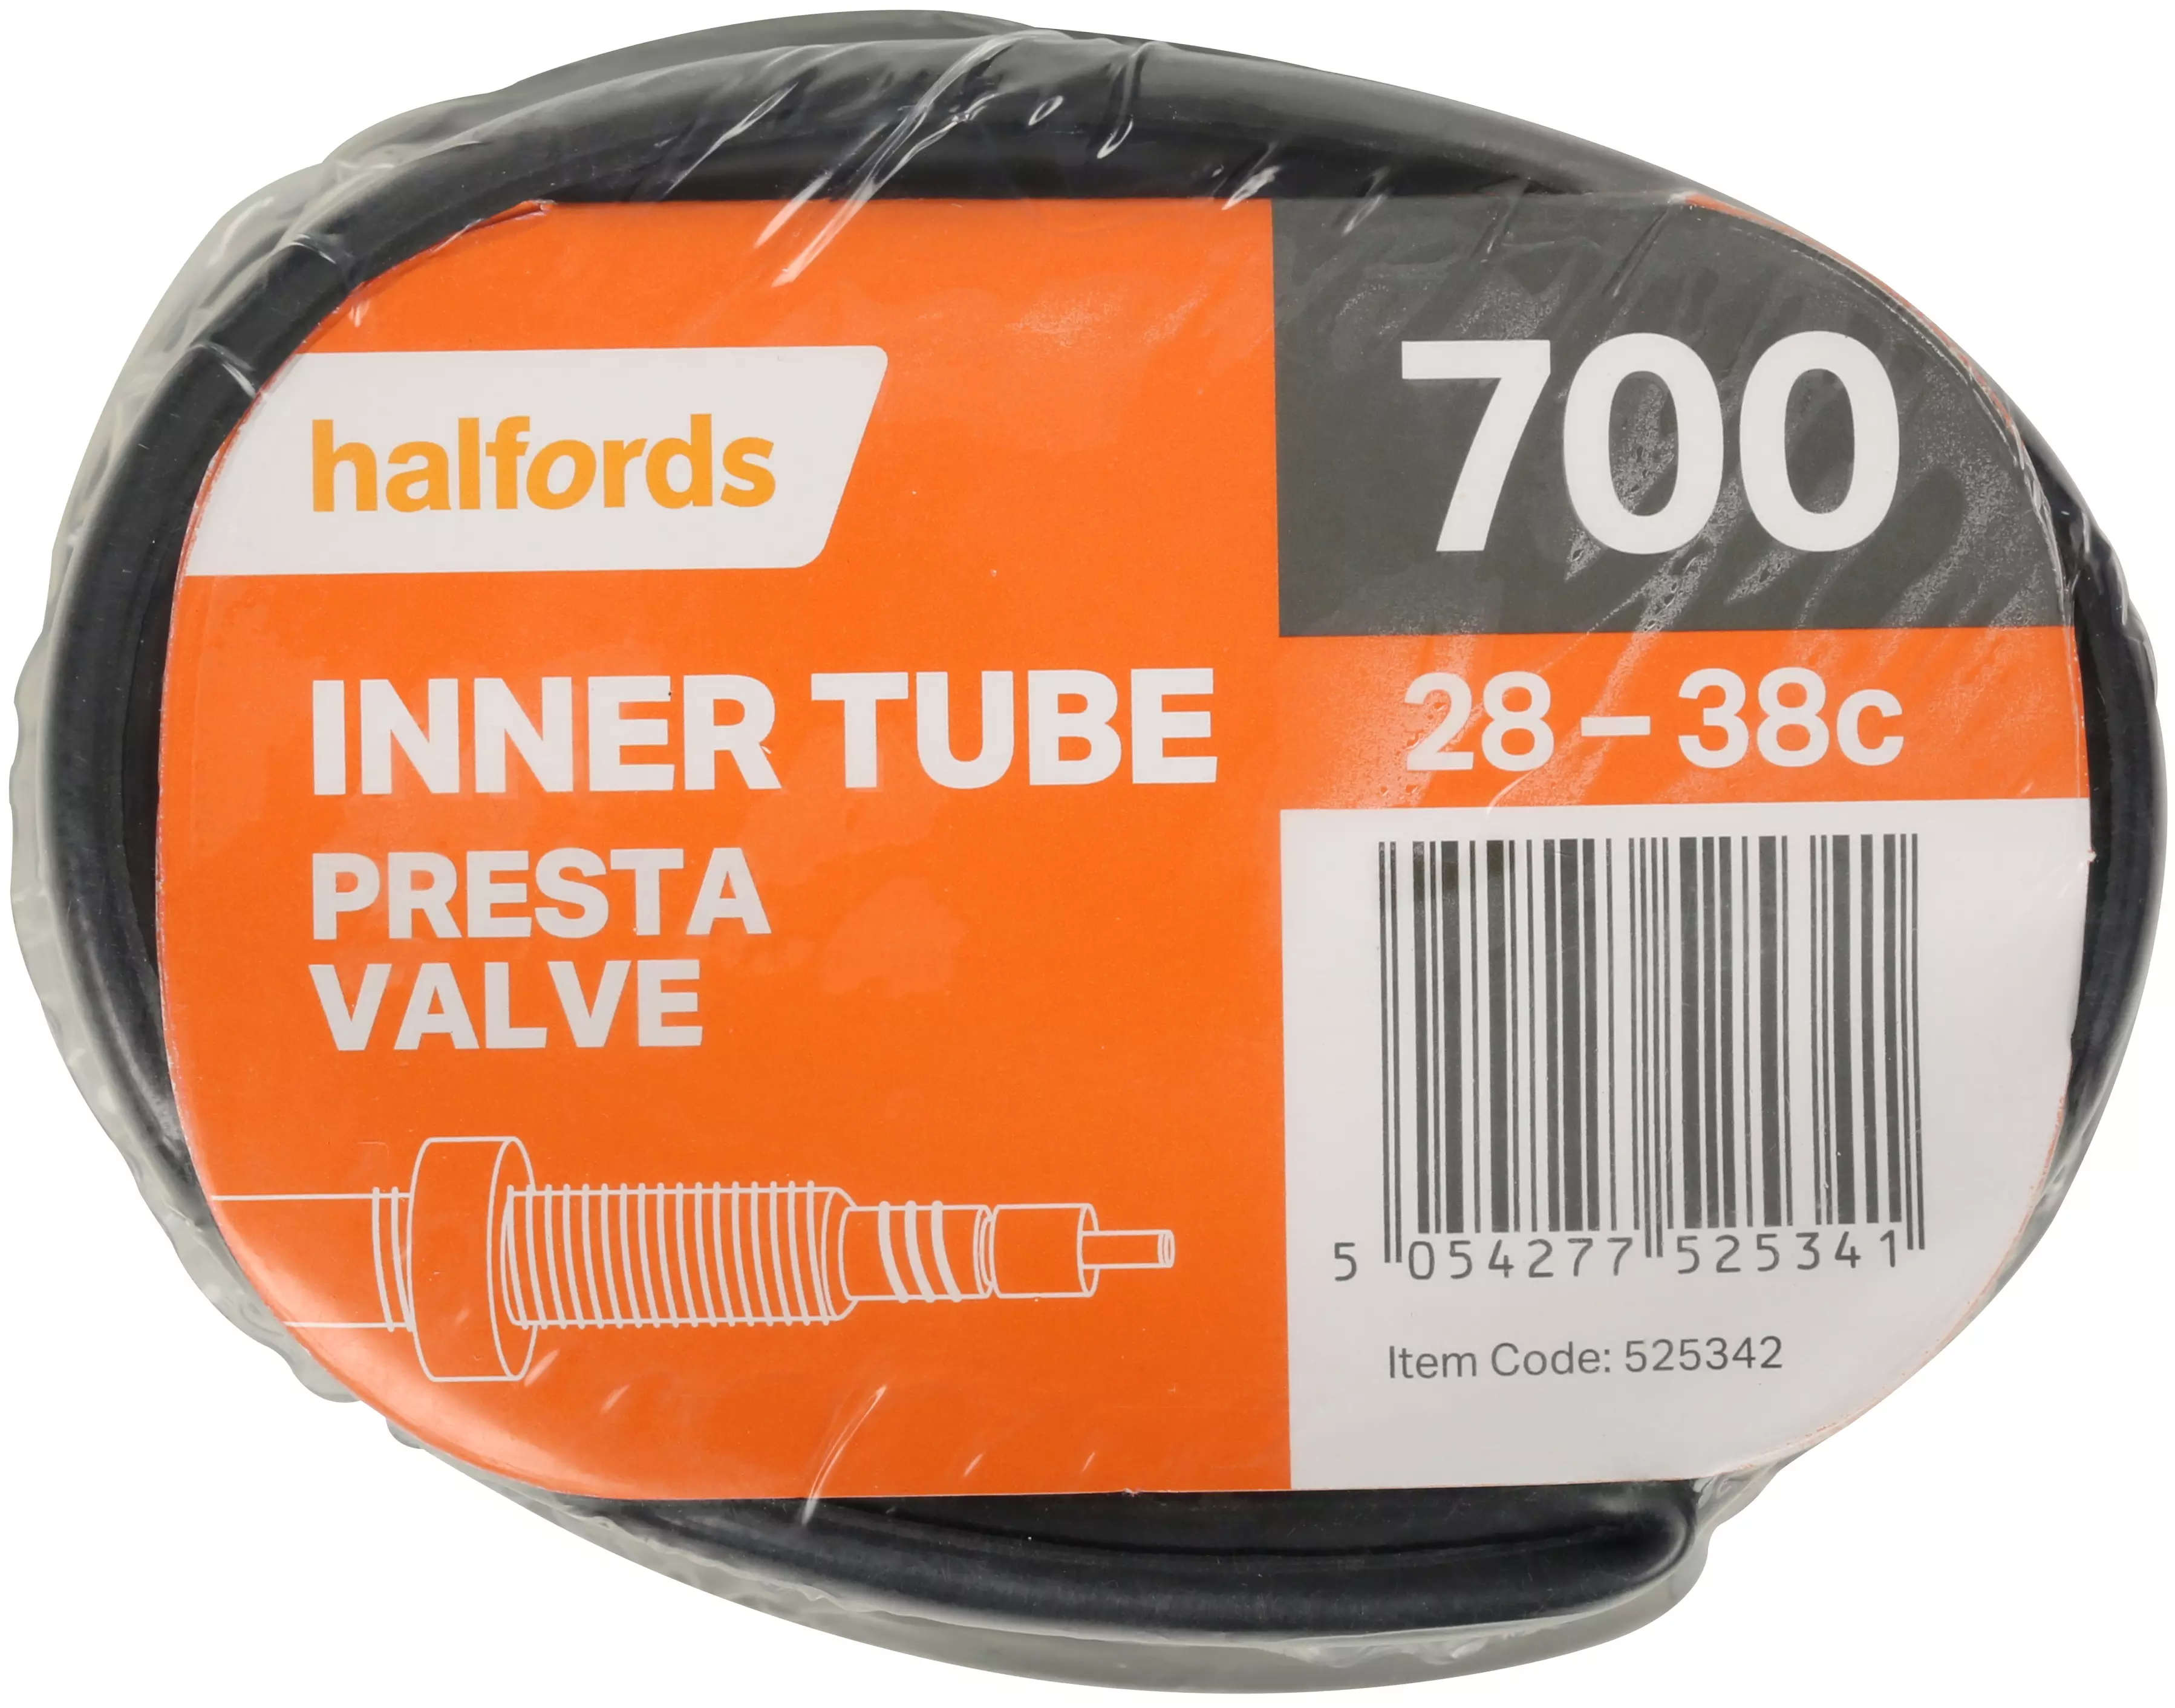 26 inch inner tube halfords